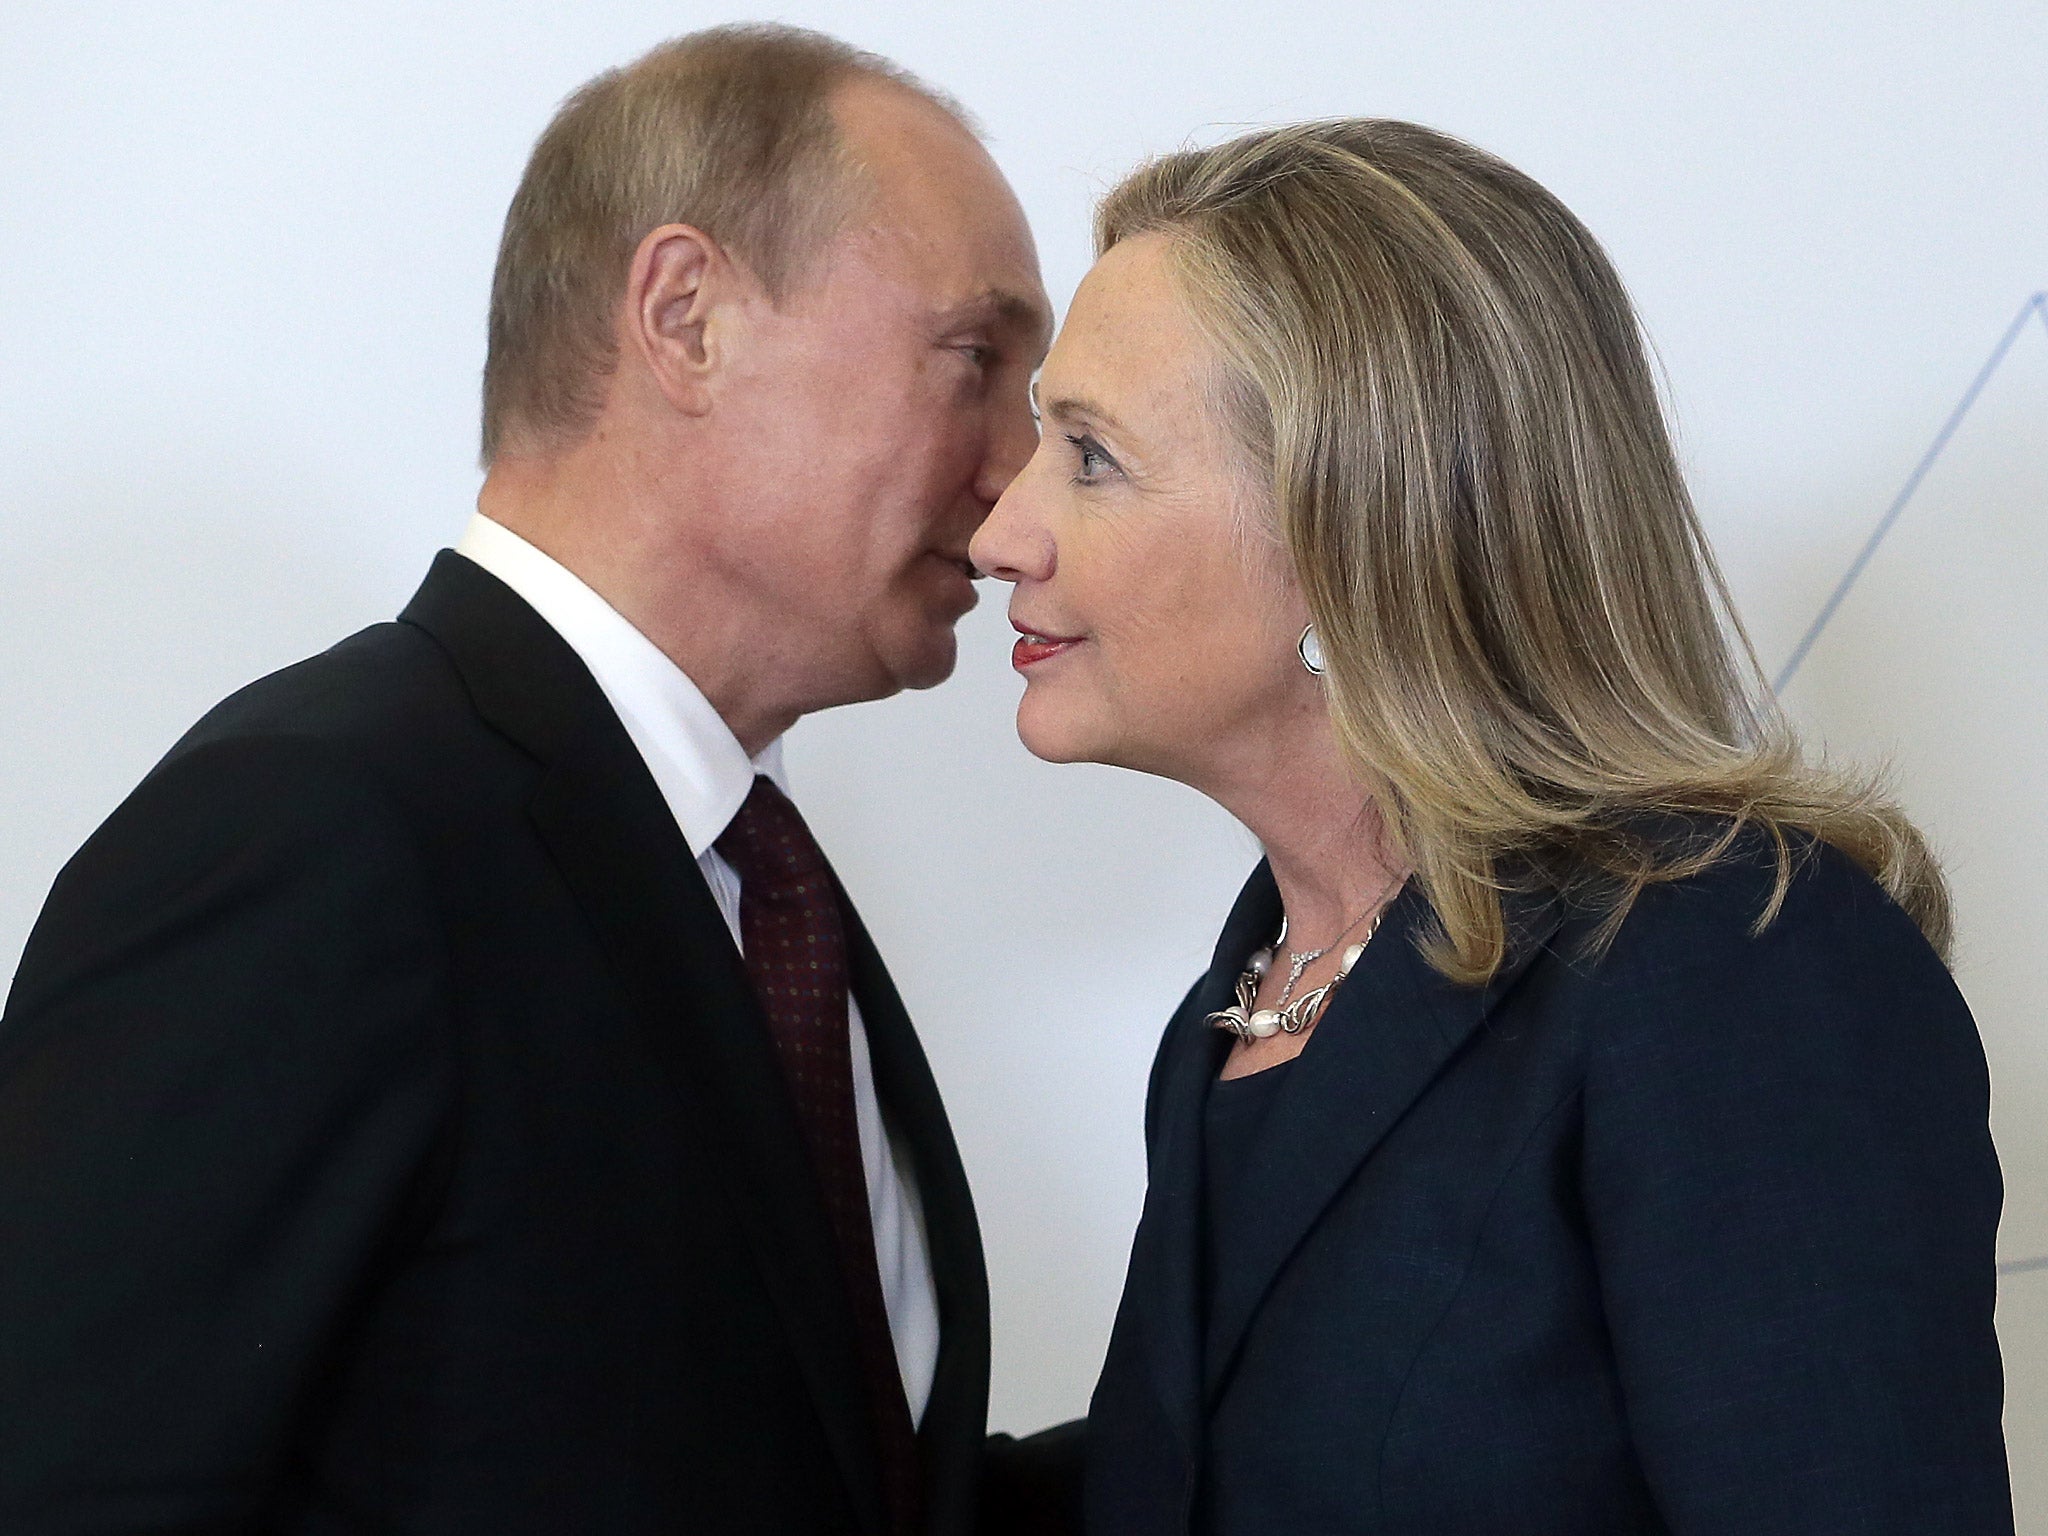 Vladimir Putin meets Hillary Clinton, then US Secretary of State, during the Asia-Pacific Economic Cooperation Summit, Vladivostok, in 2012